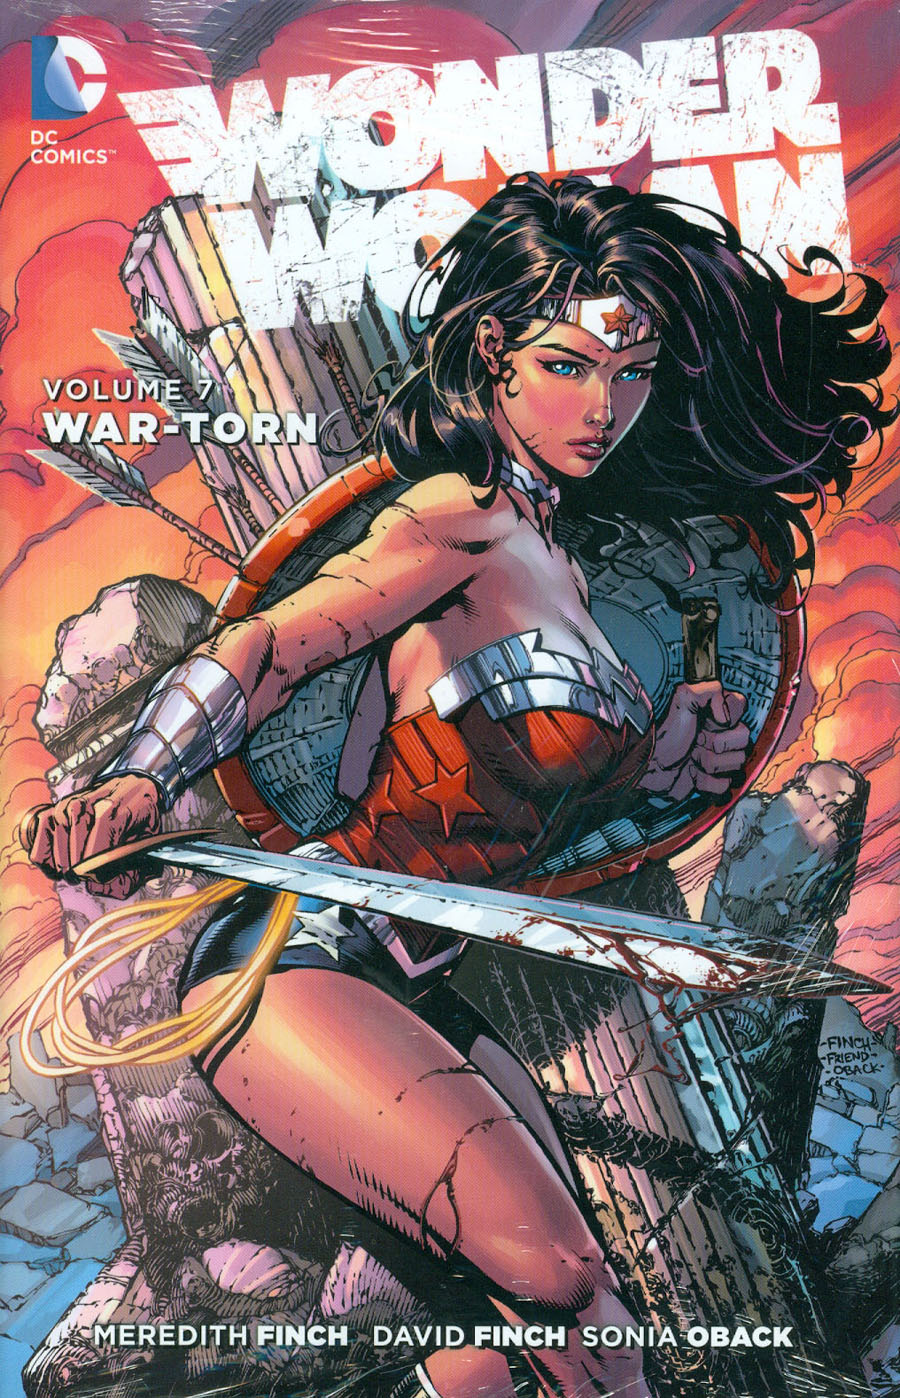 Wonder Woman (New 52) Vol 7 War-Torn HC